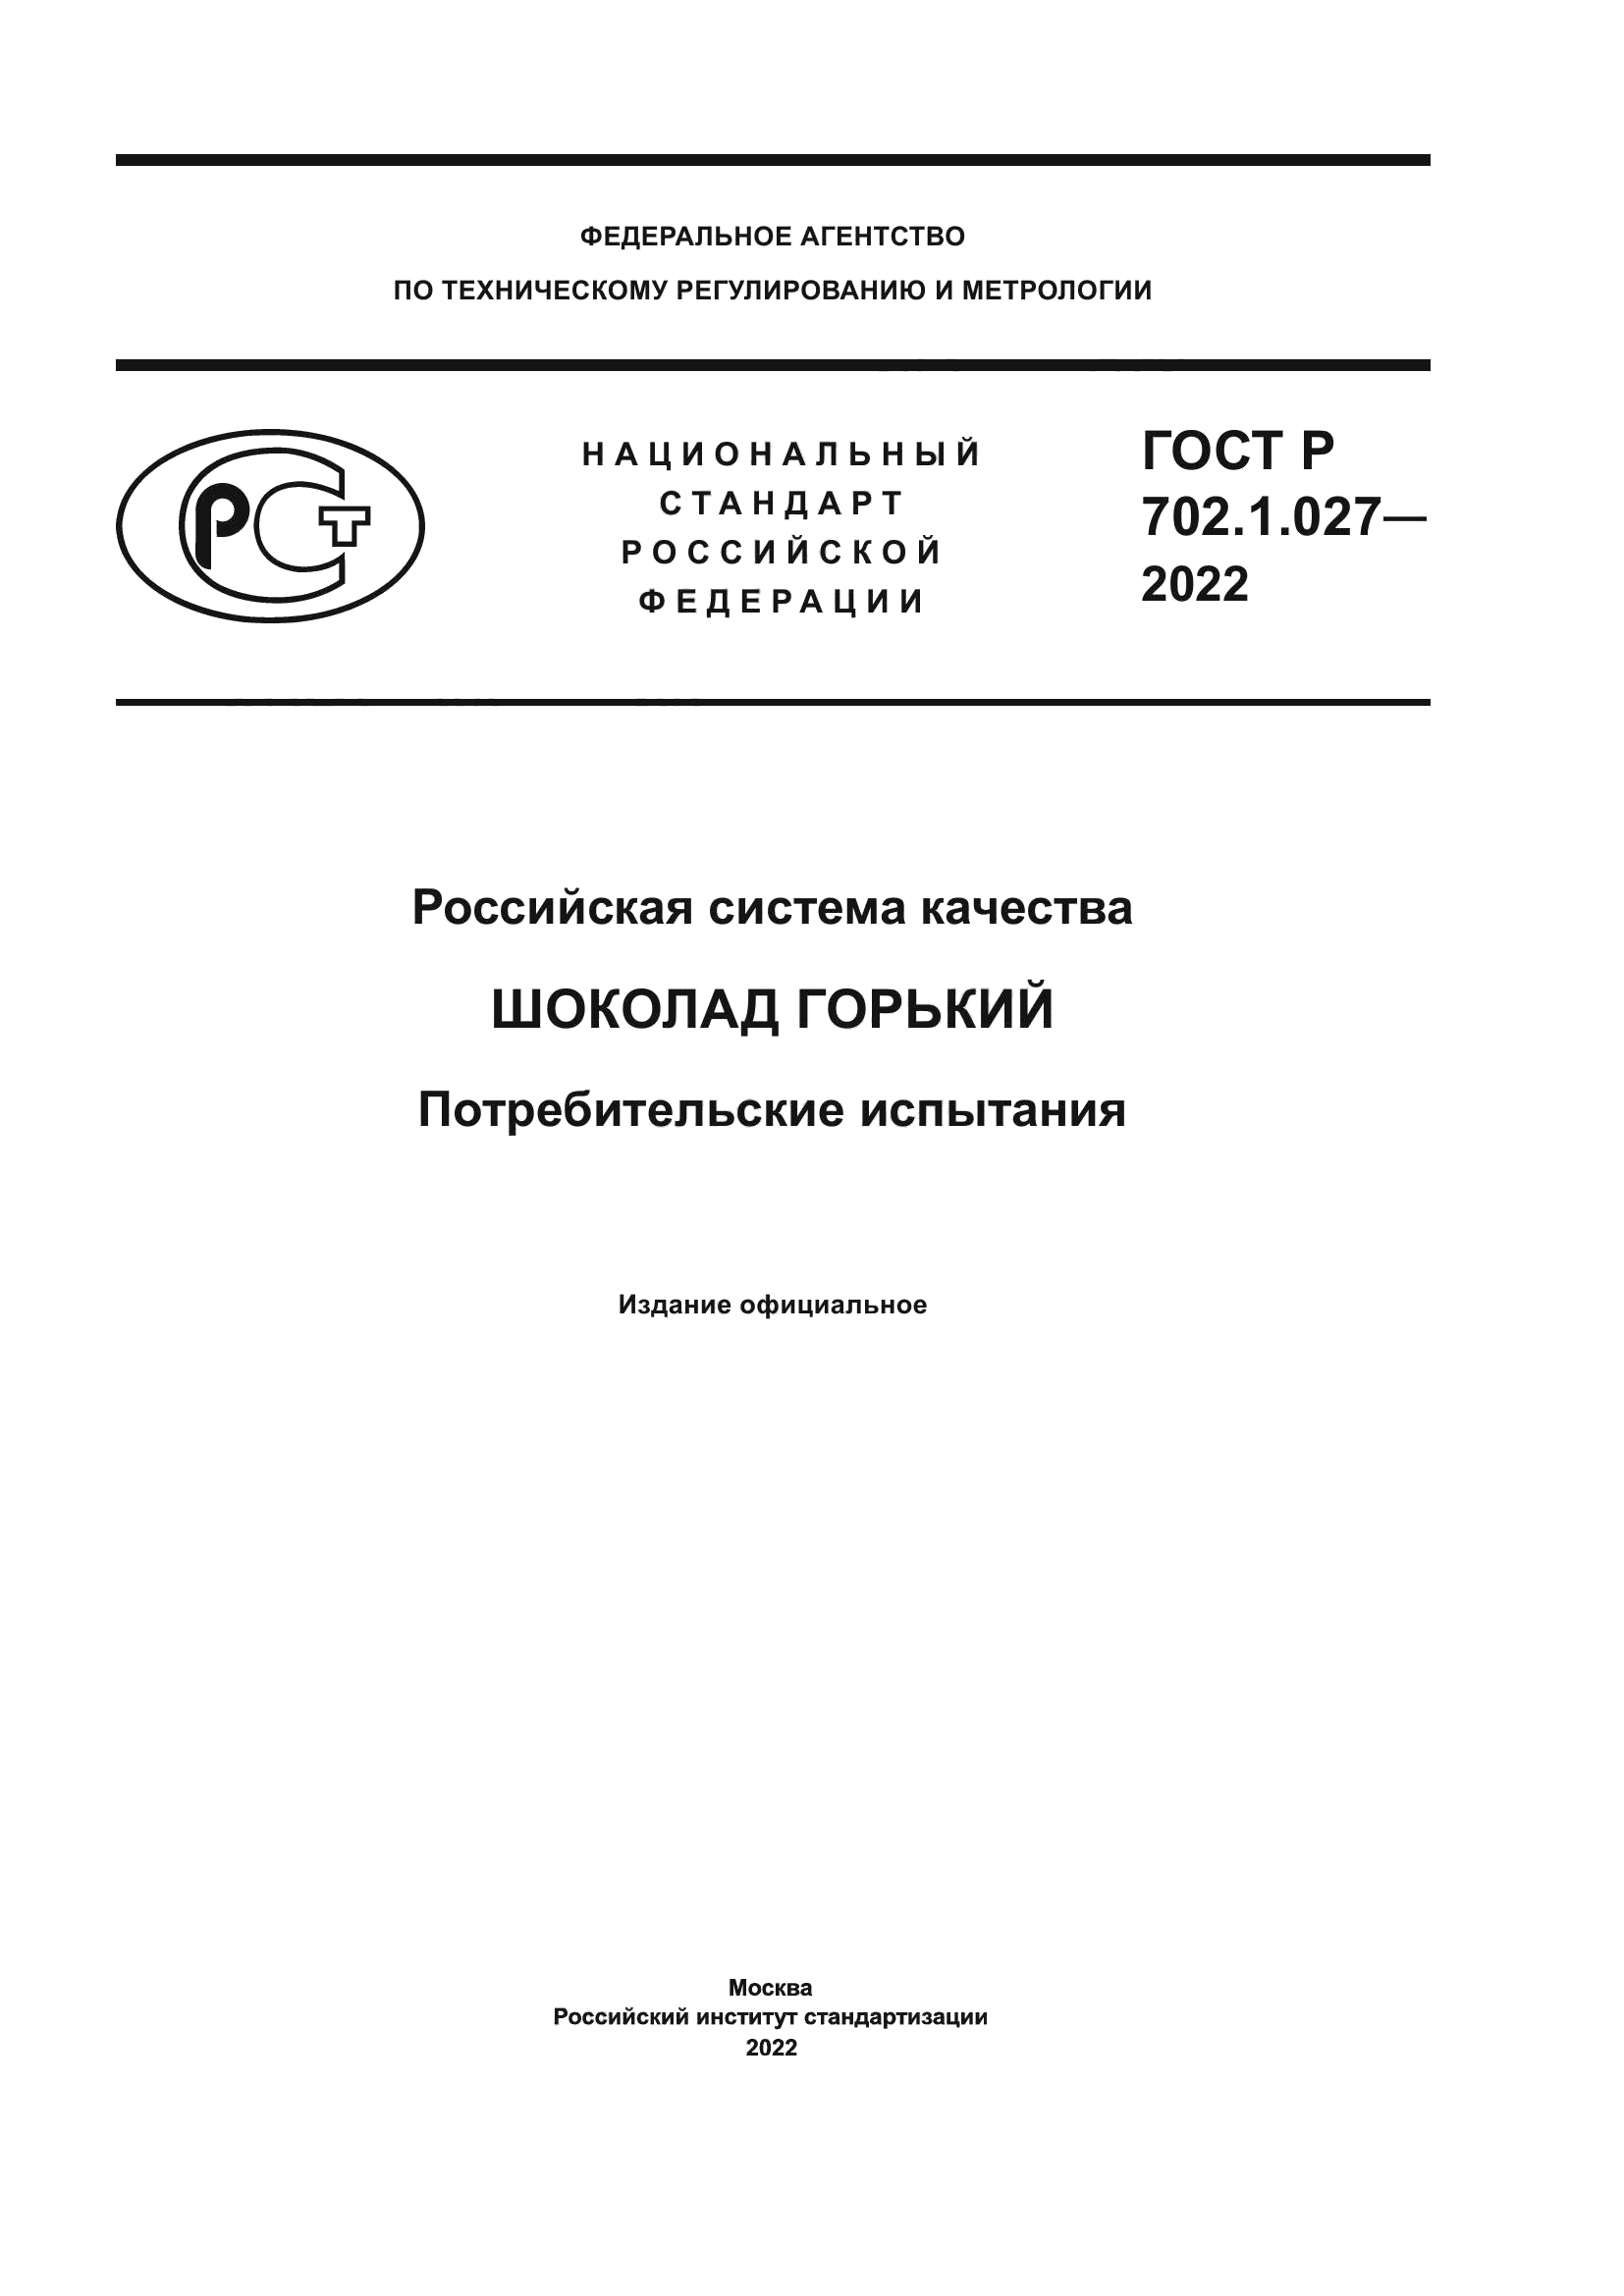 ГОСТ Р 702.1.027-2022